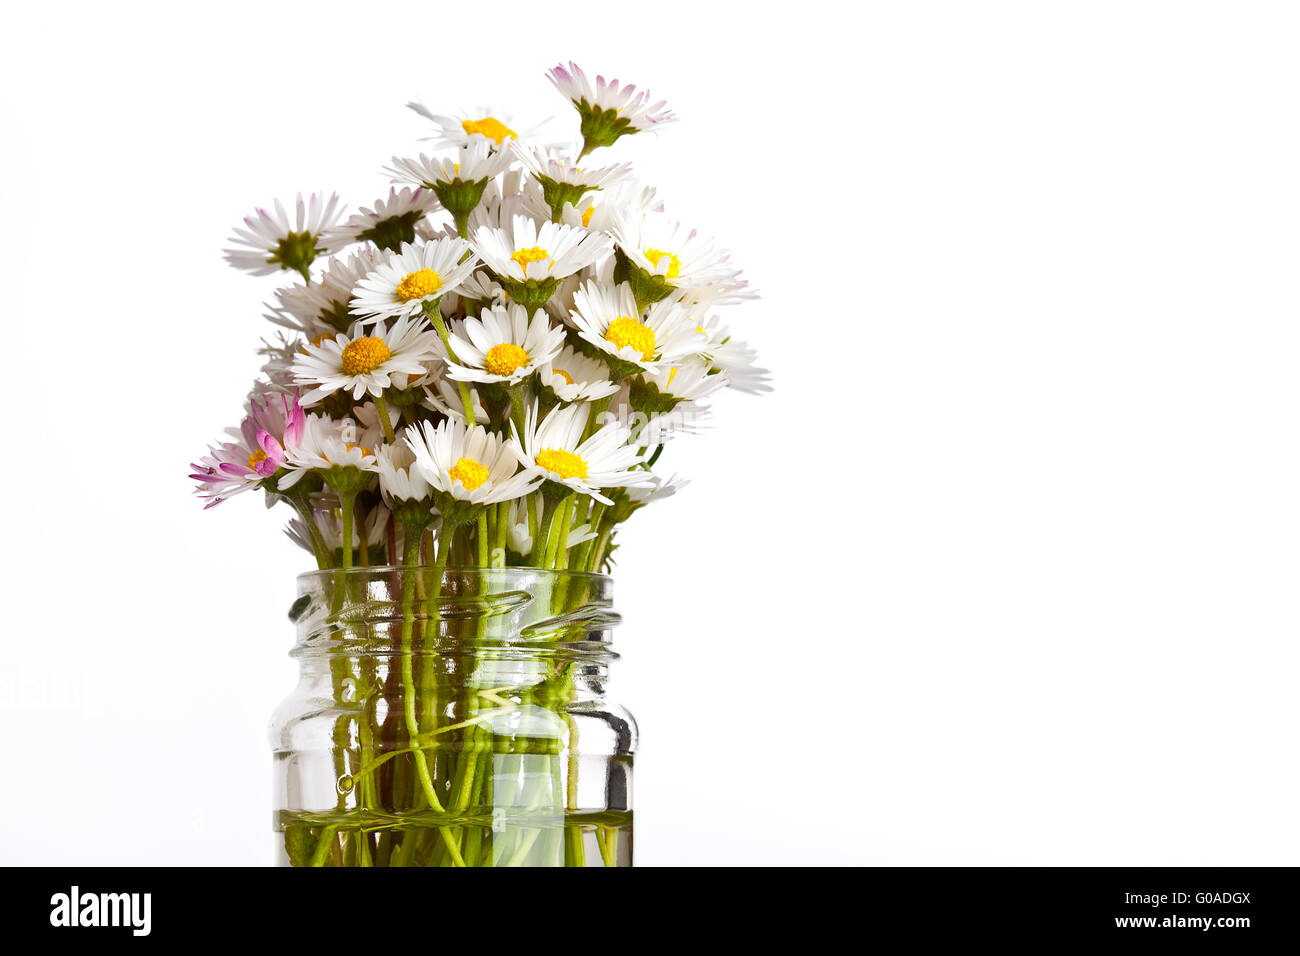 Daisy flowers in glass on white background studio shot Stock Photo